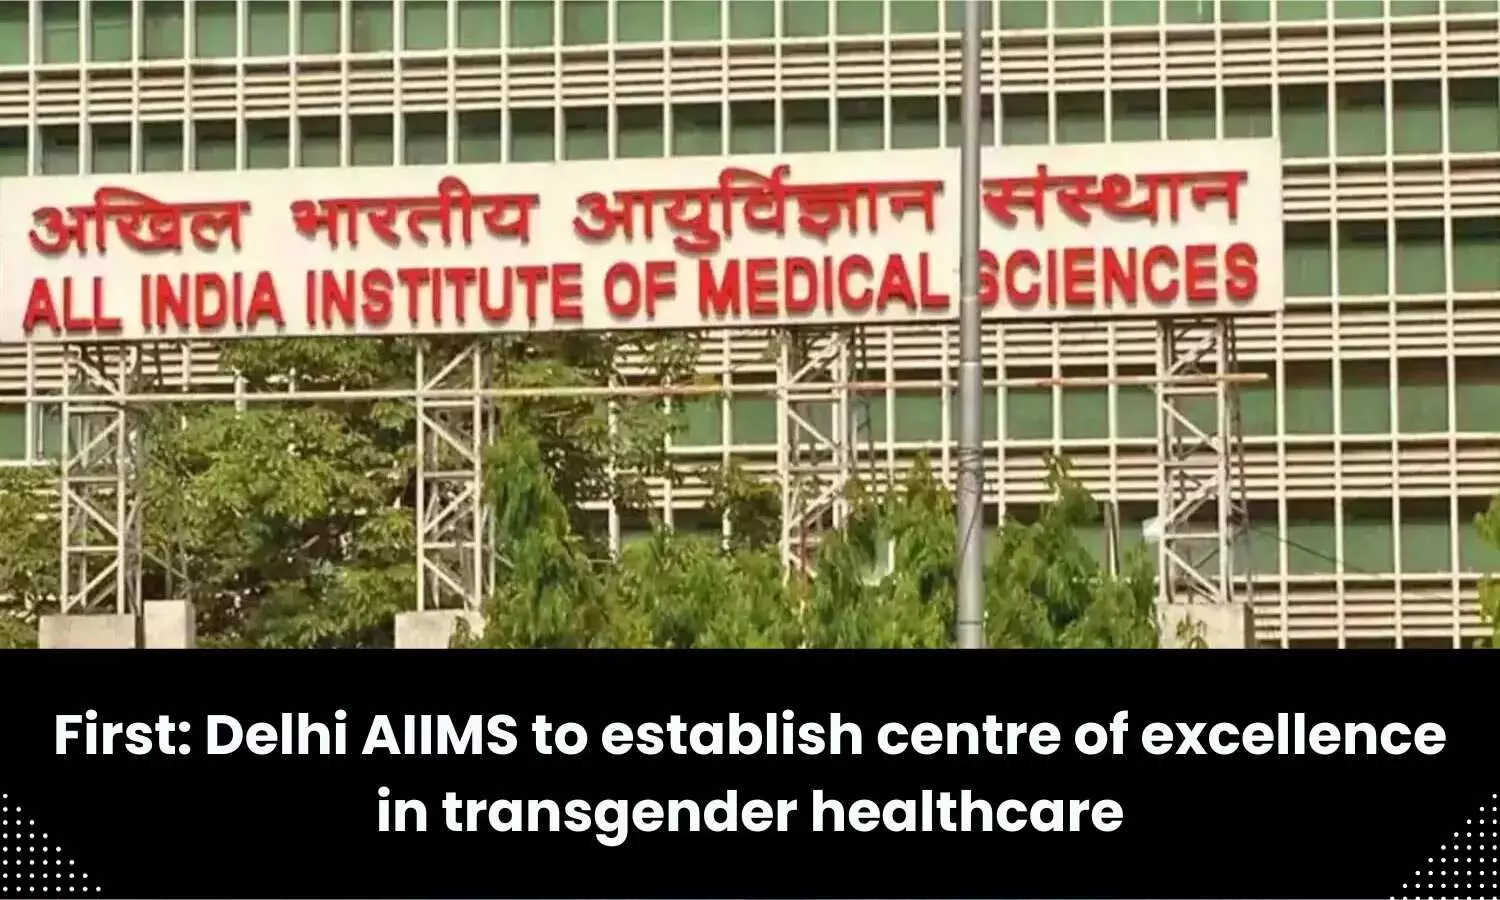 AIIMS Delhi to establish centre of excellence in transgender healthcare